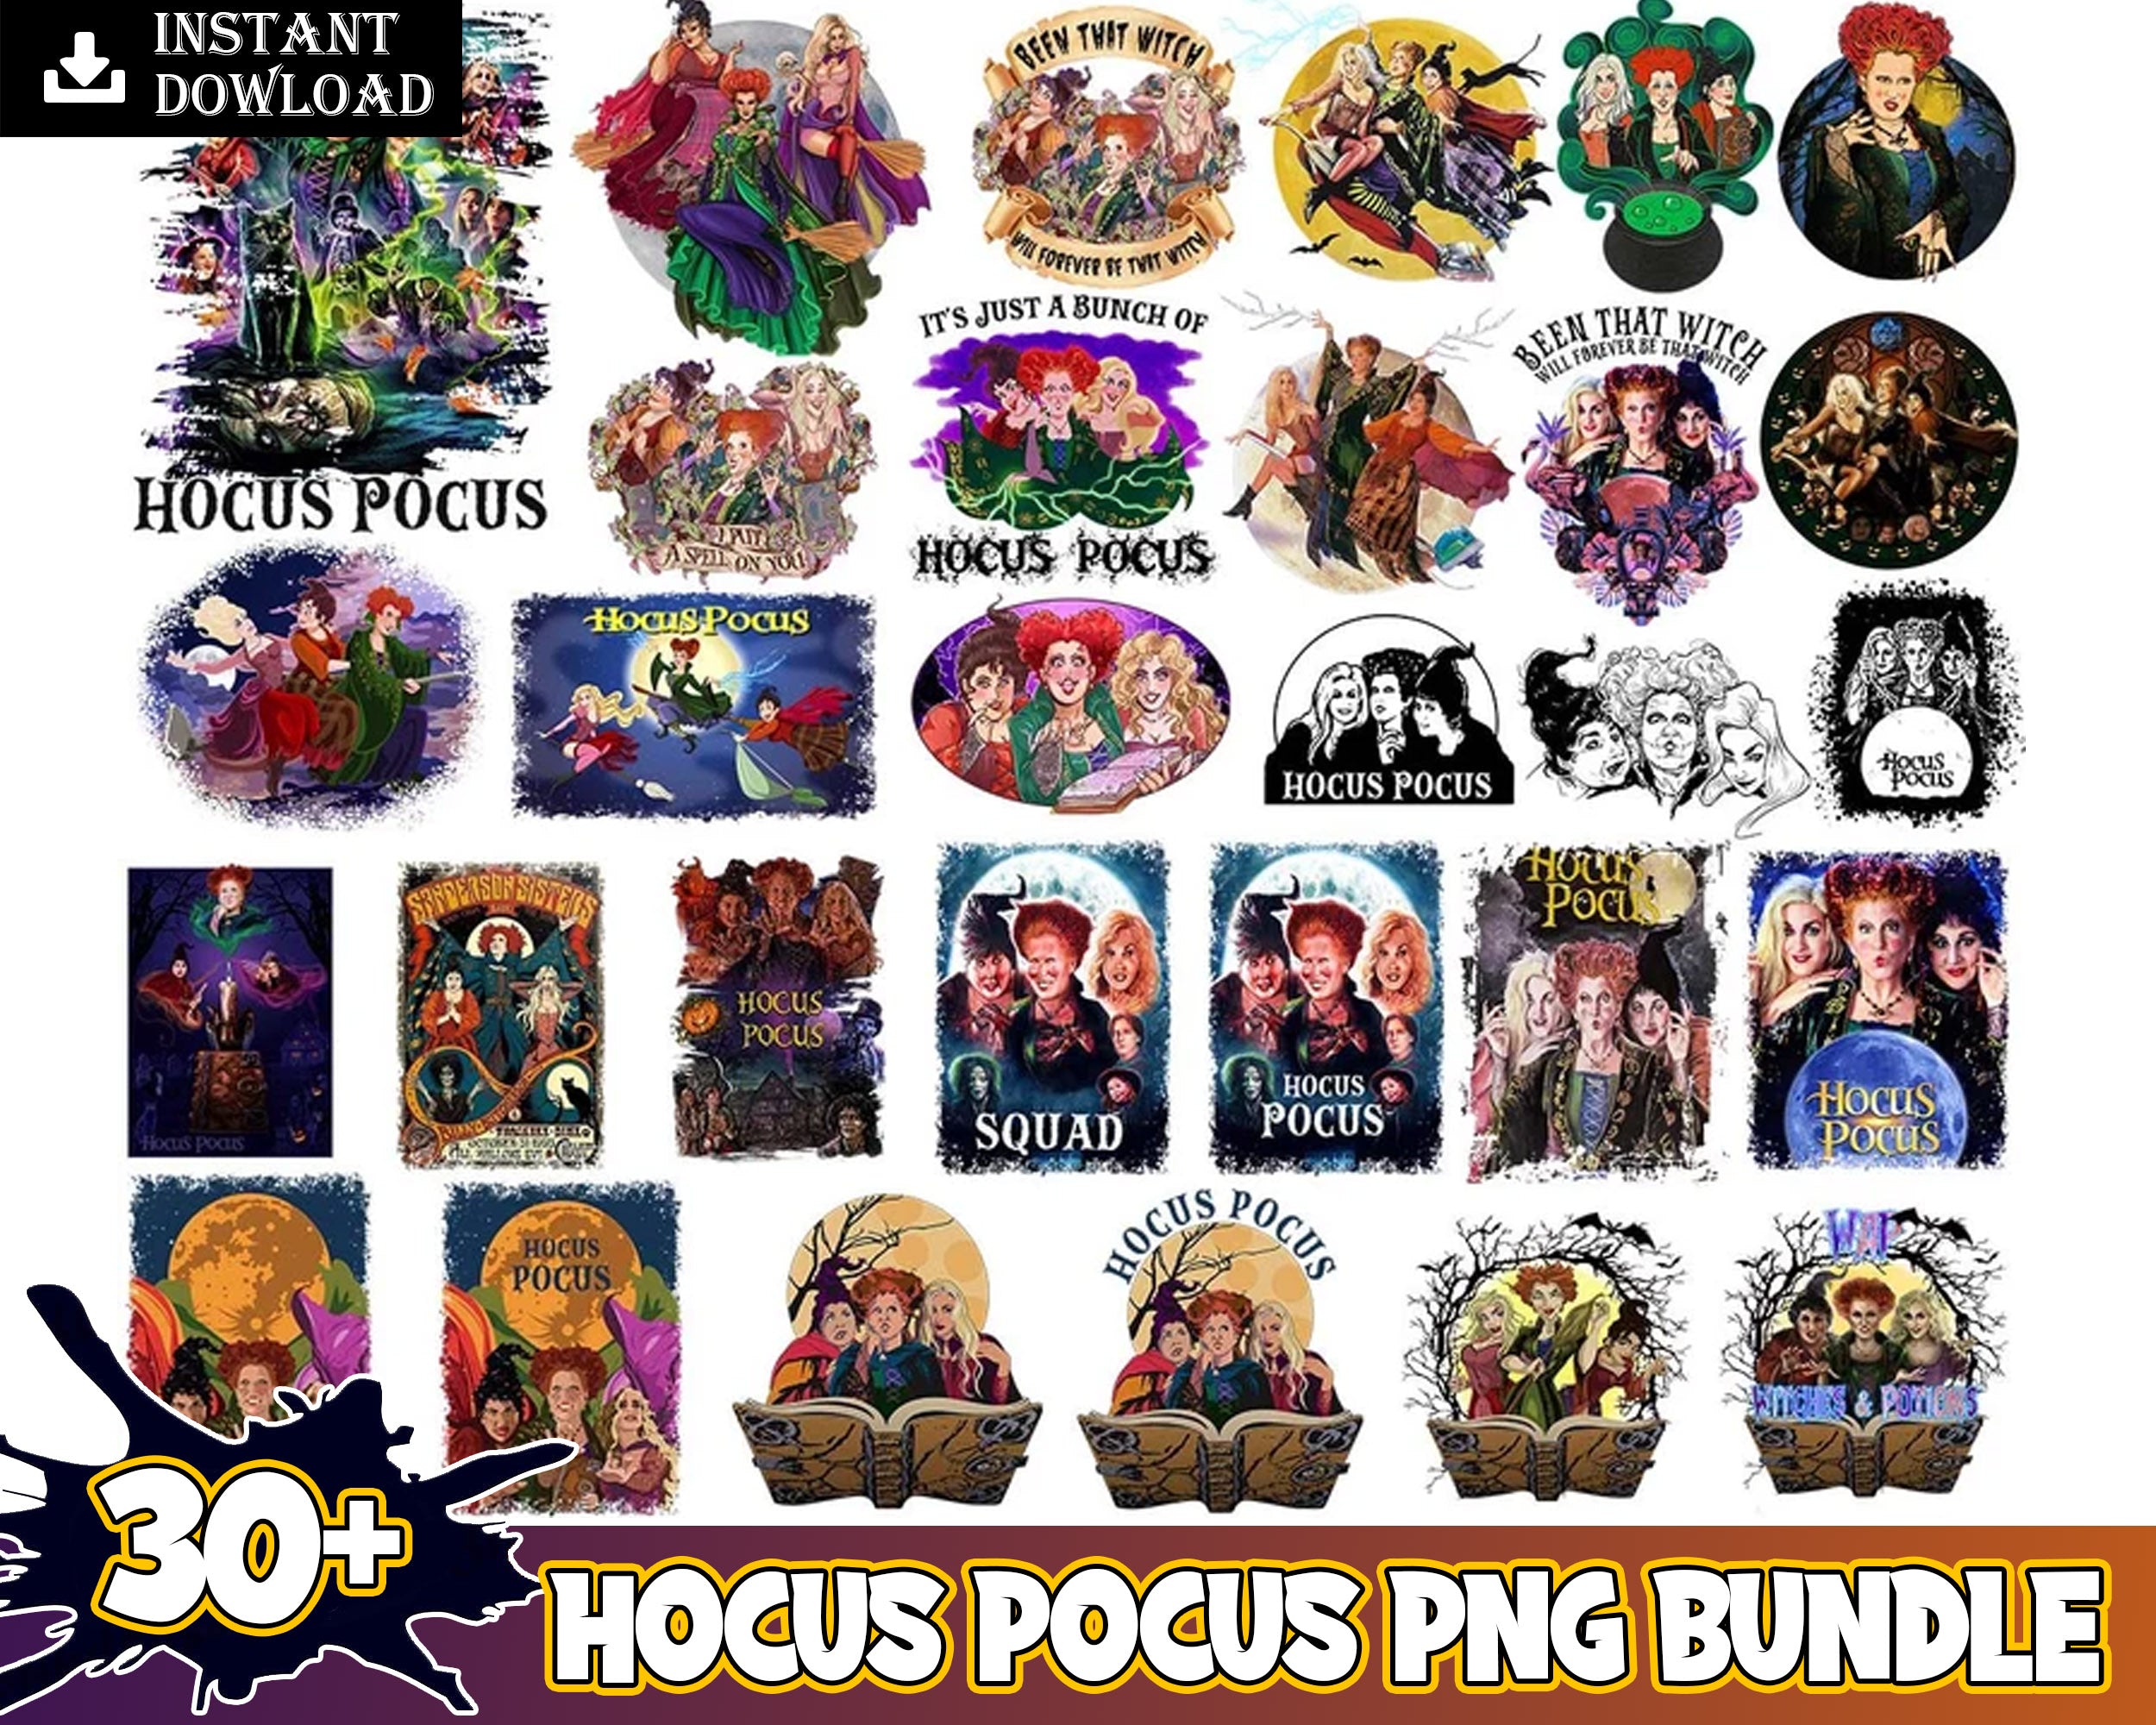 30 Hocus Pocus Png Bundle, Sanderson sisters png files, Digital bundle download.